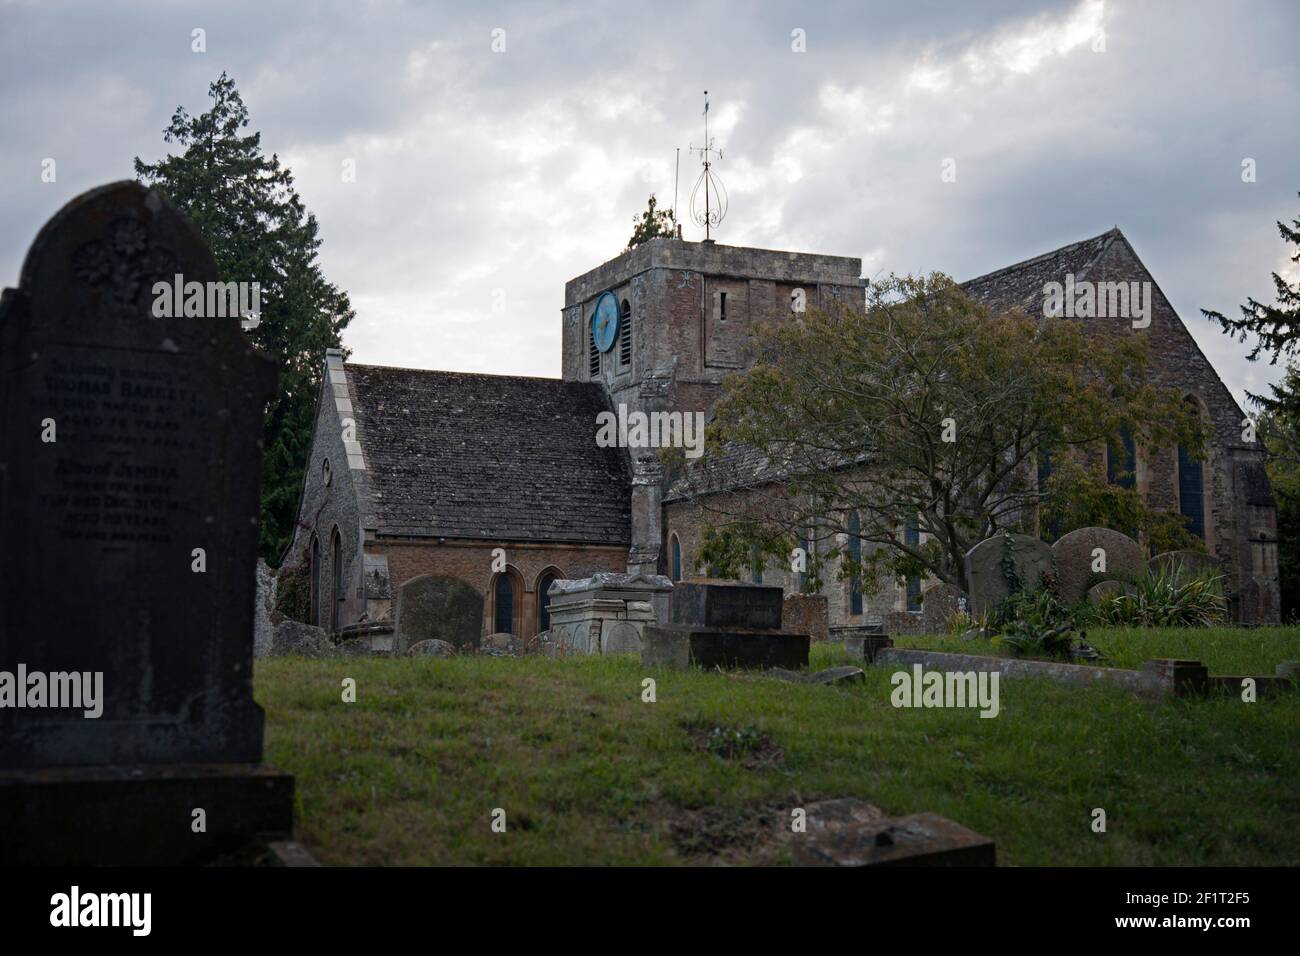 All Saints Church, Faringdon, Oxfordshire seen from the graveyard Stock Photo